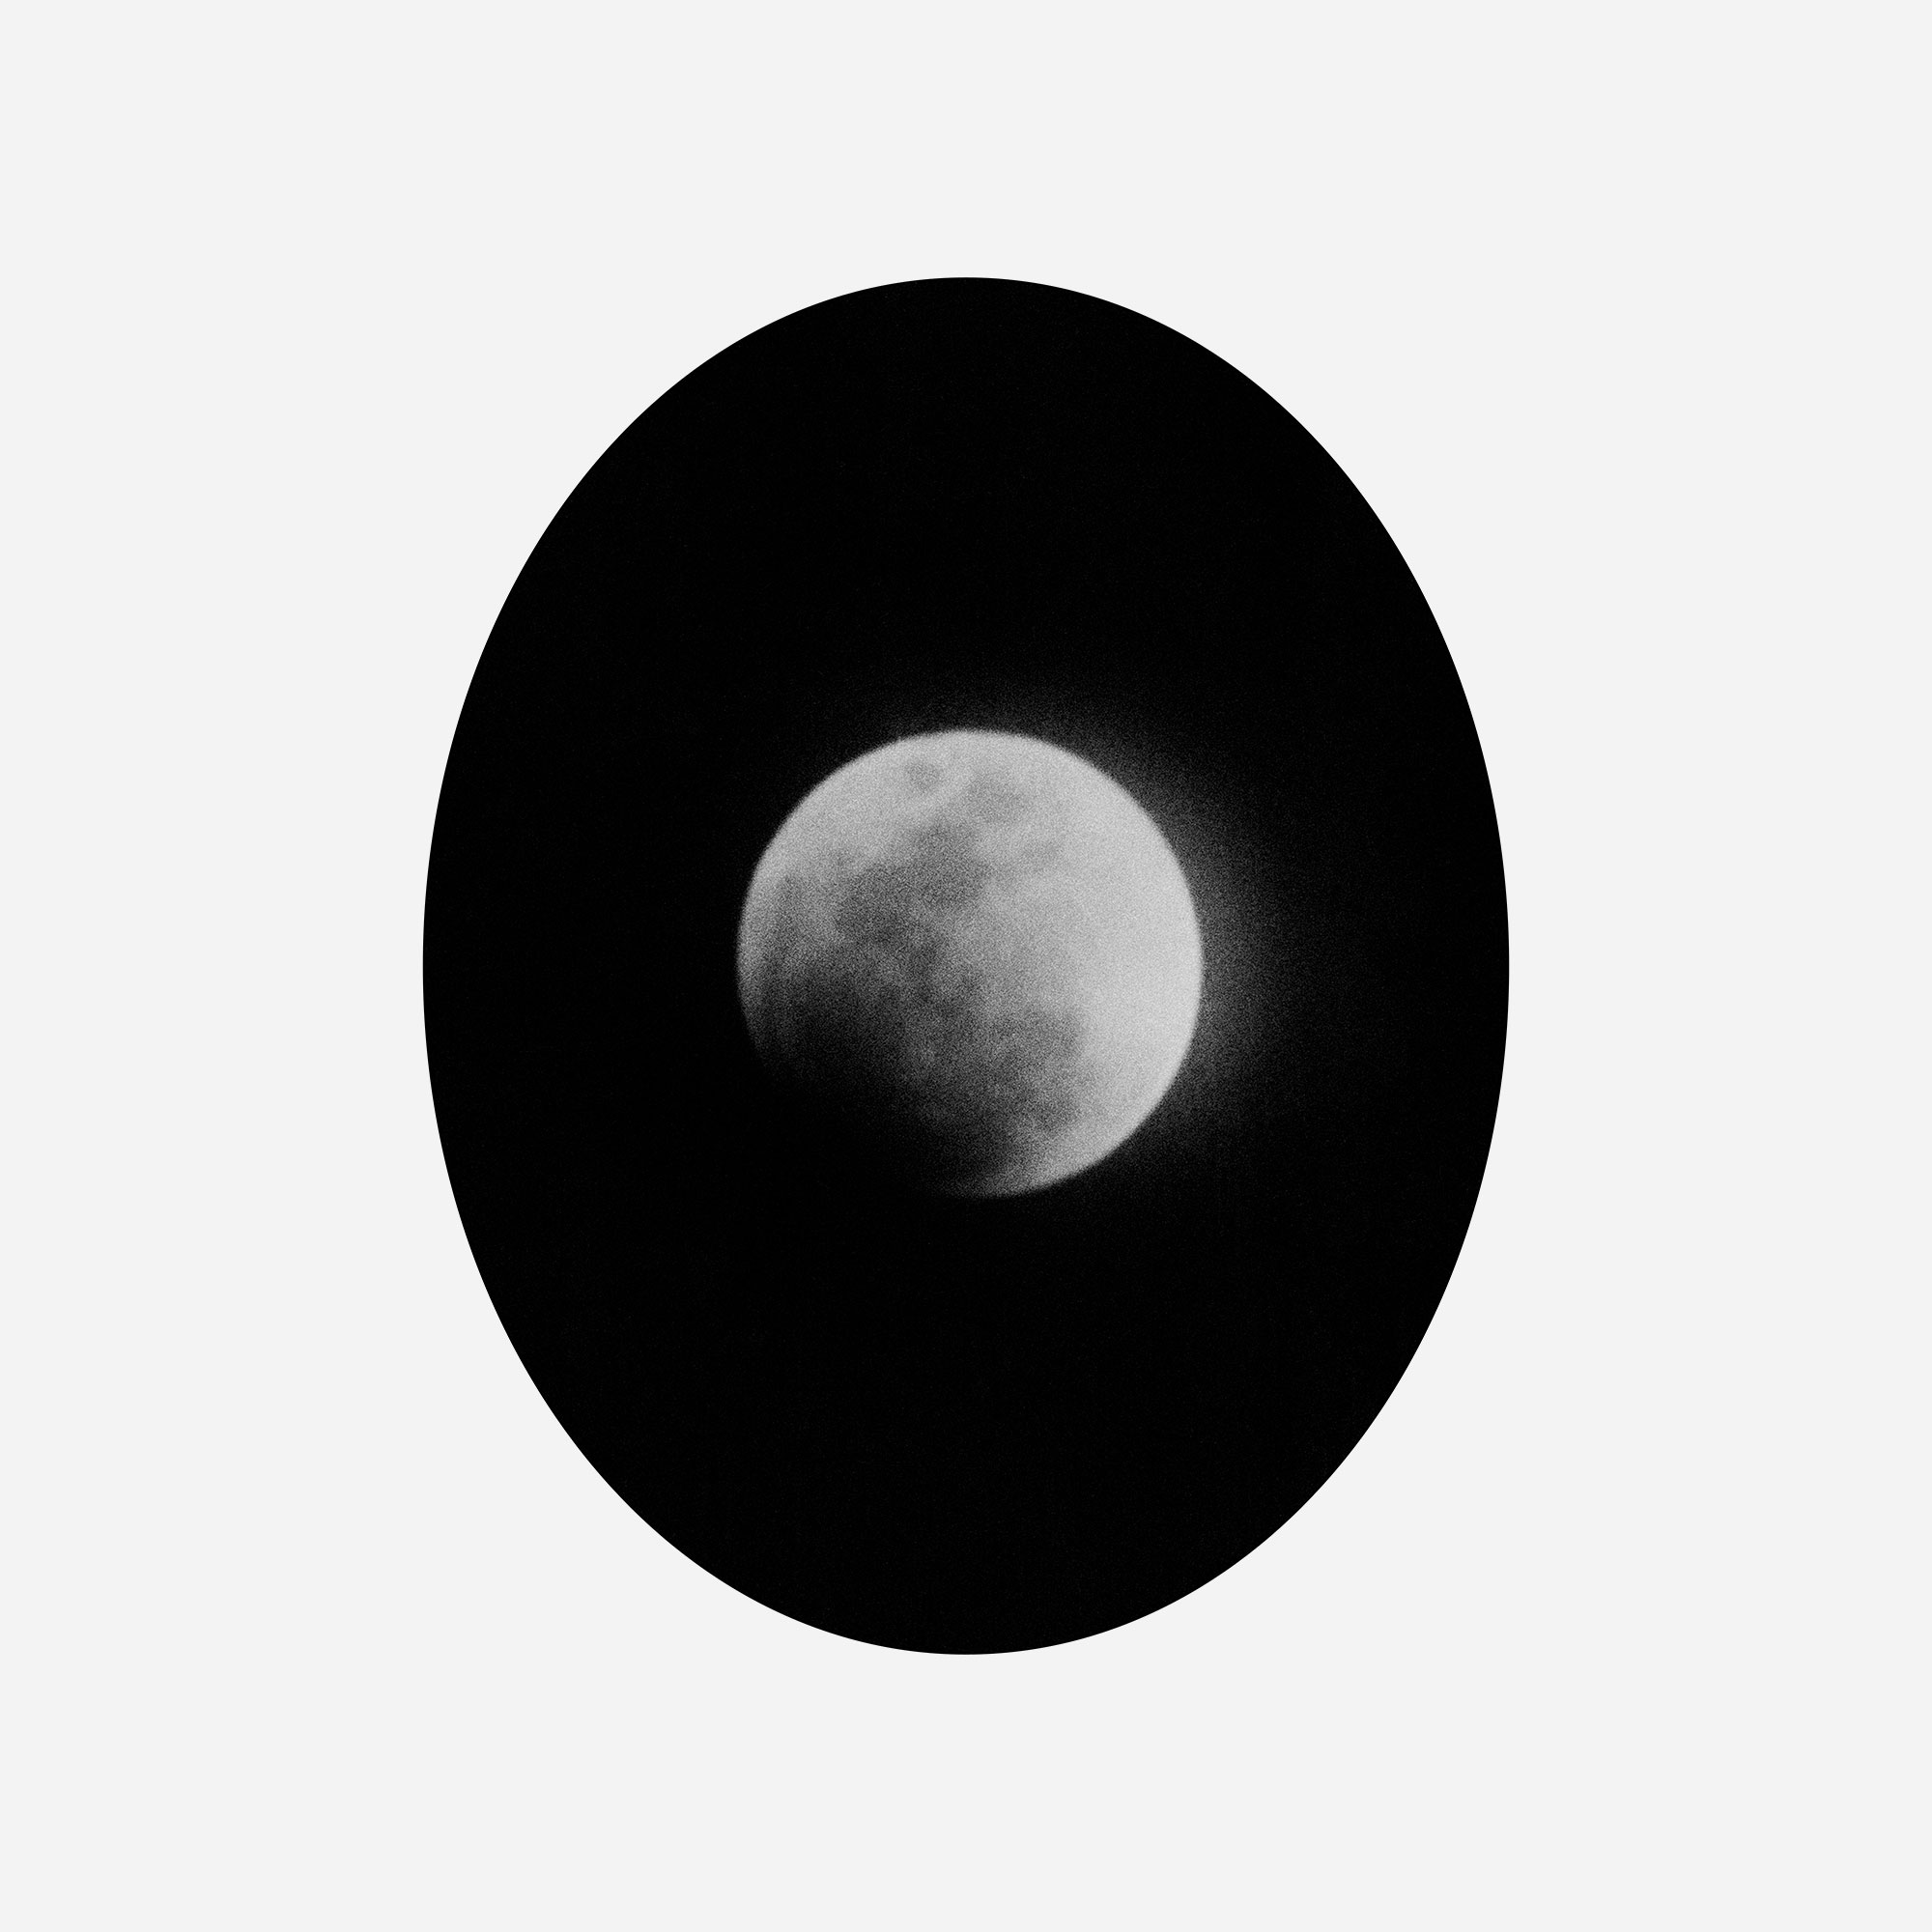 Art, Gæst No. 14, Eclipsing Moon, 2012